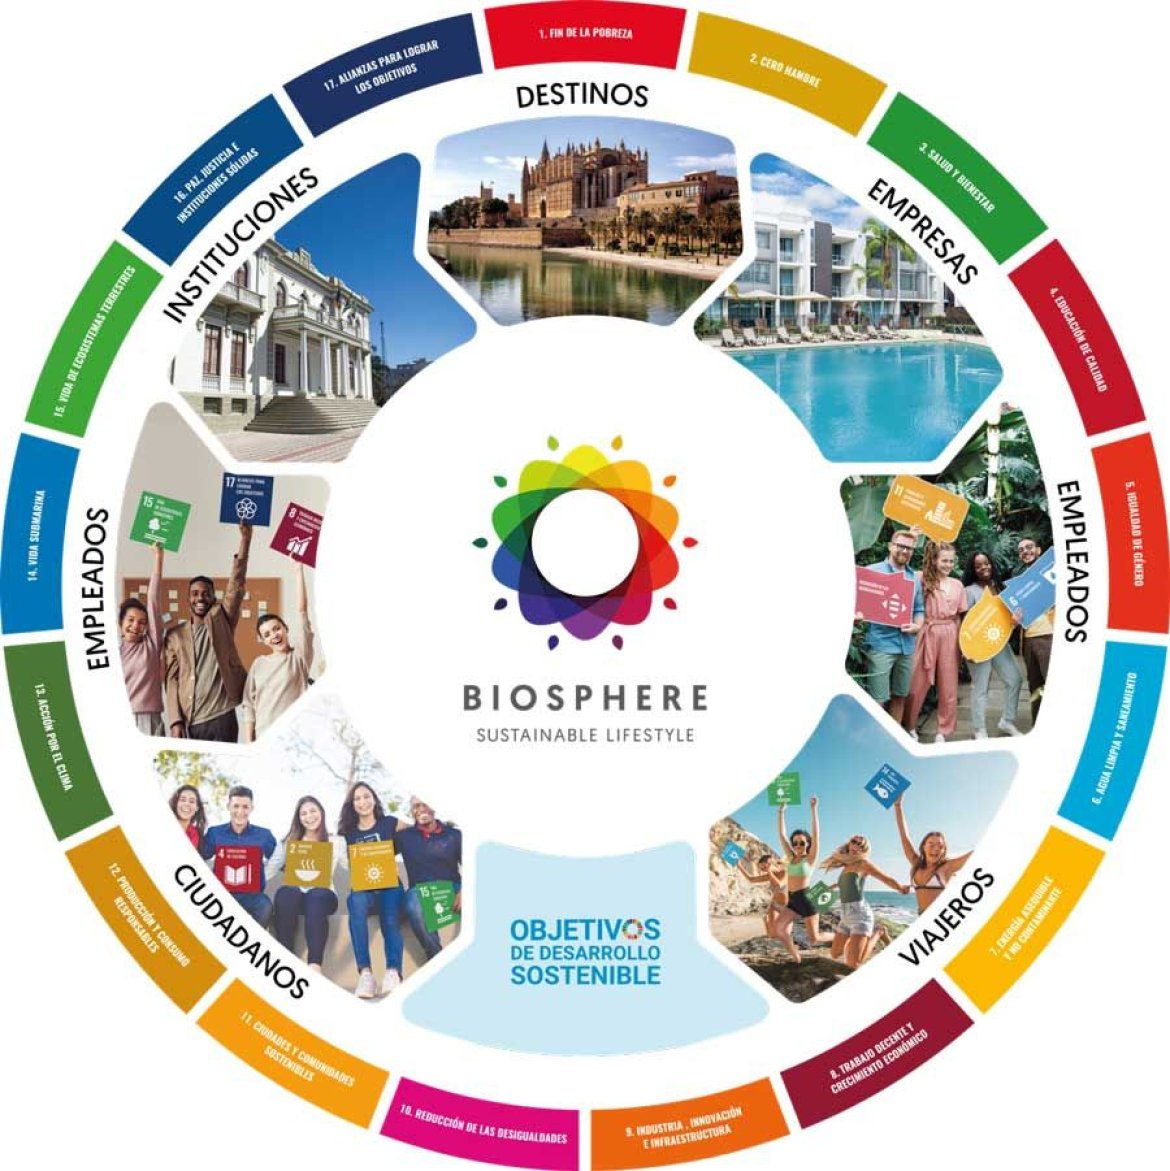 Why Biosphere?